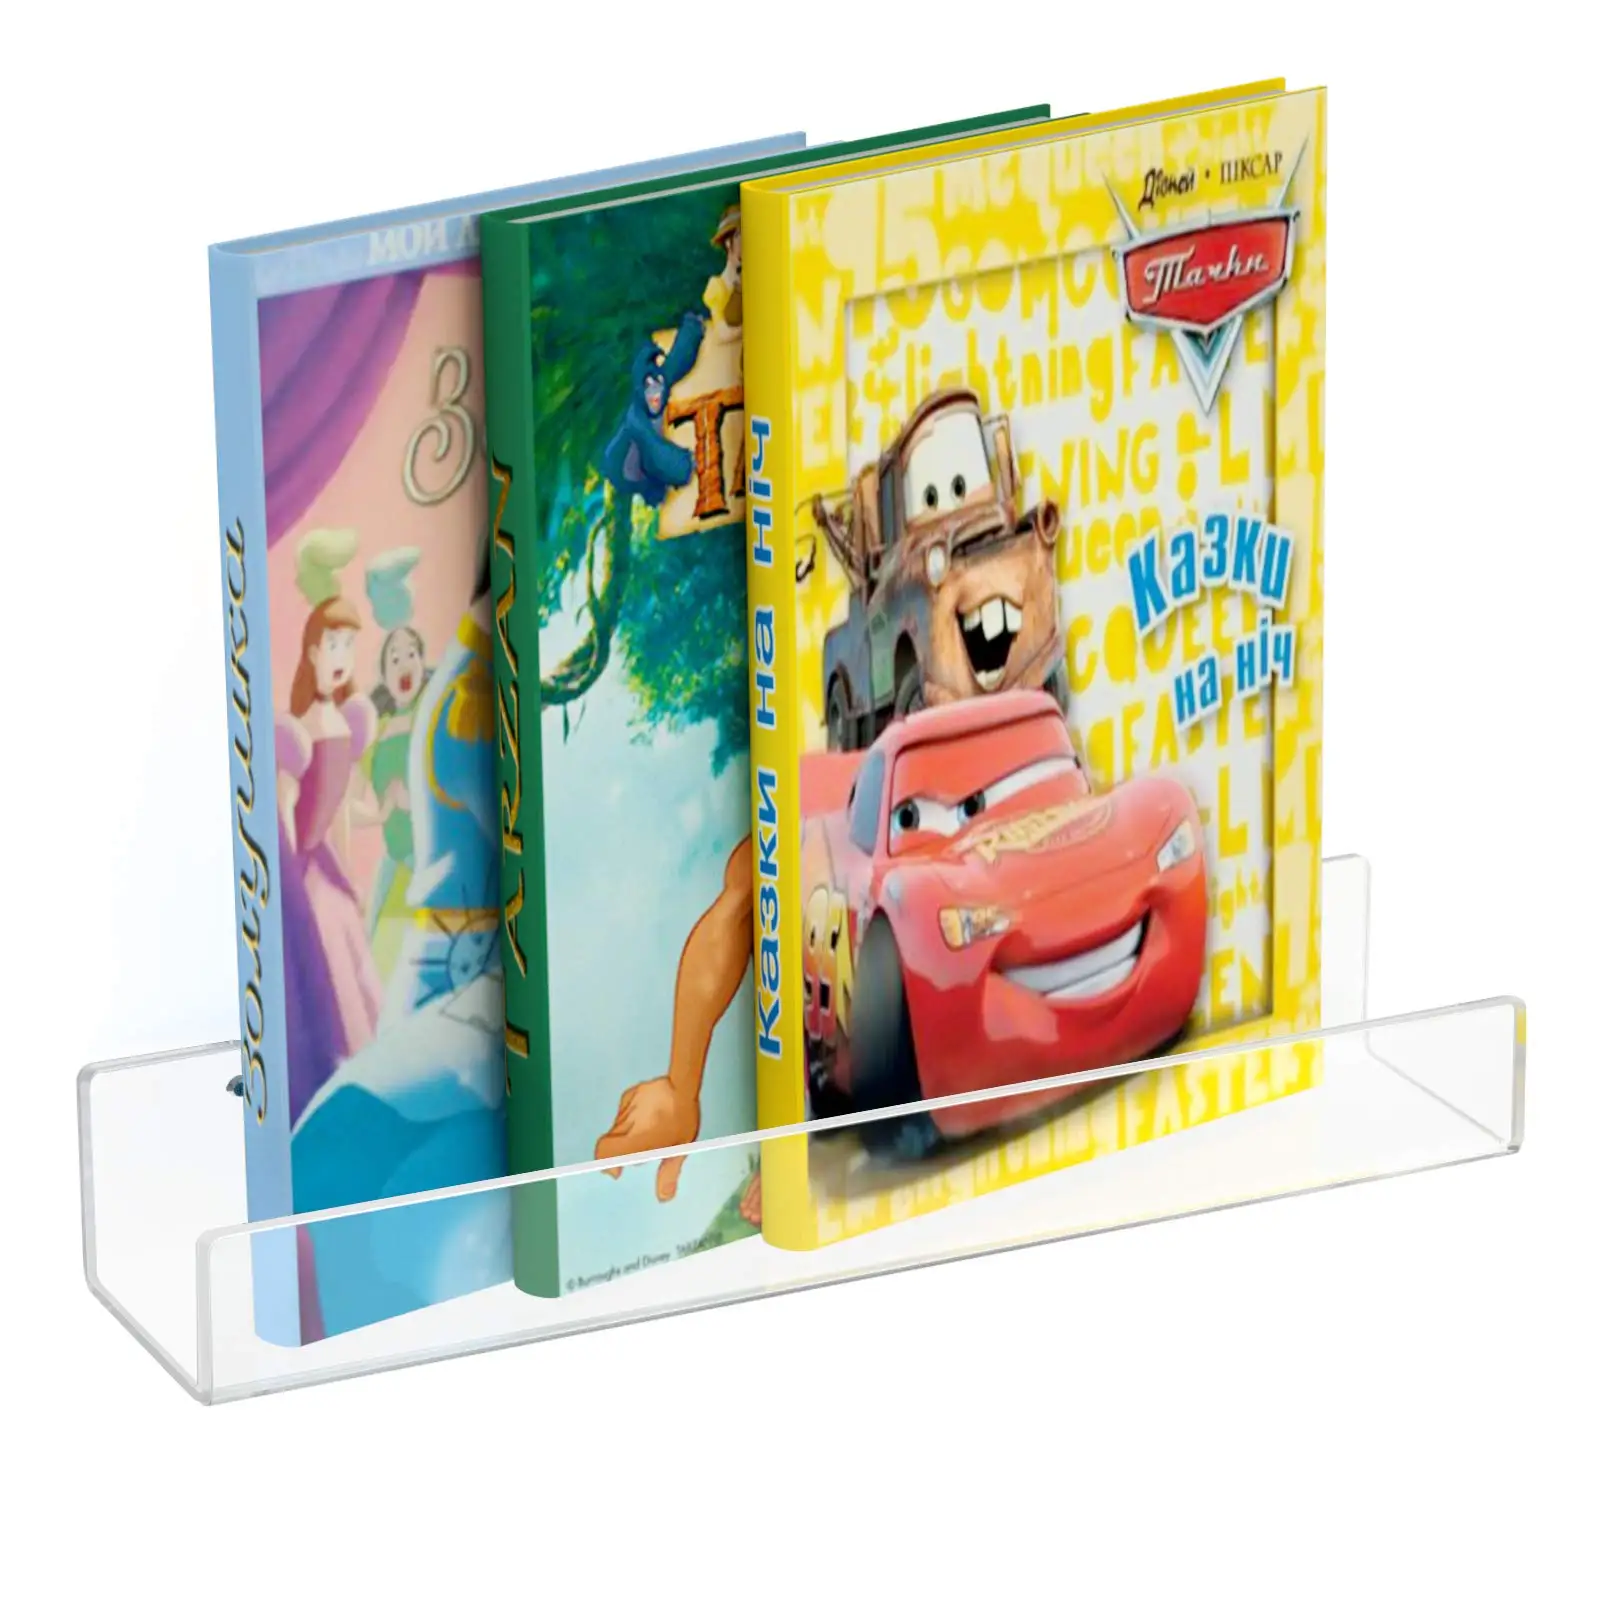 

24" Acrylic Floating Nursery Kids Bookshelf Wall Ledge Shelf, Clear Invisible Spice Rack Bathroom Storage Shelves Display